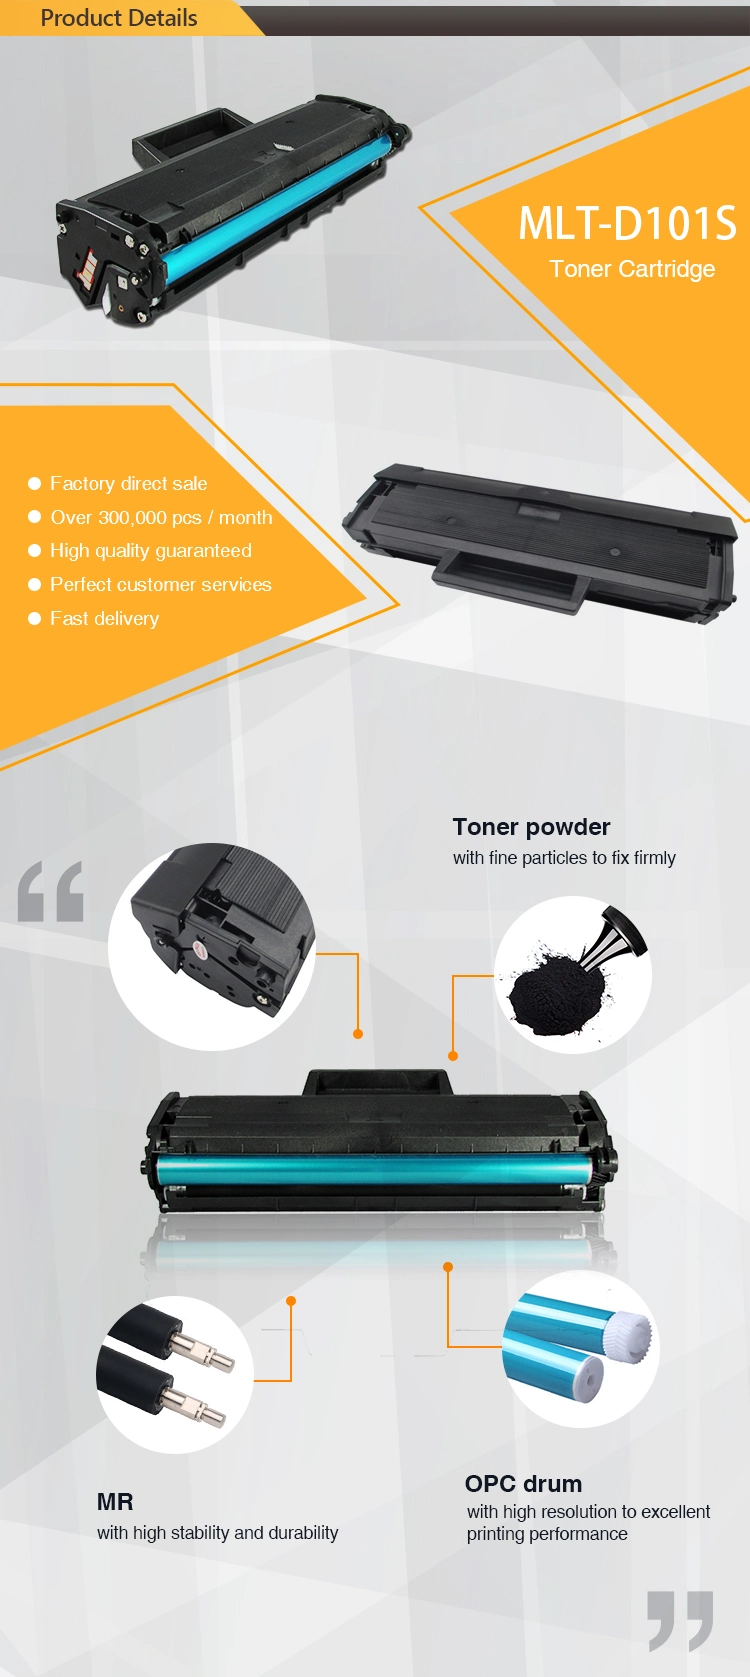 Mlt D101s Universal Compatible Black Toner Cartridge for Samsung Printer